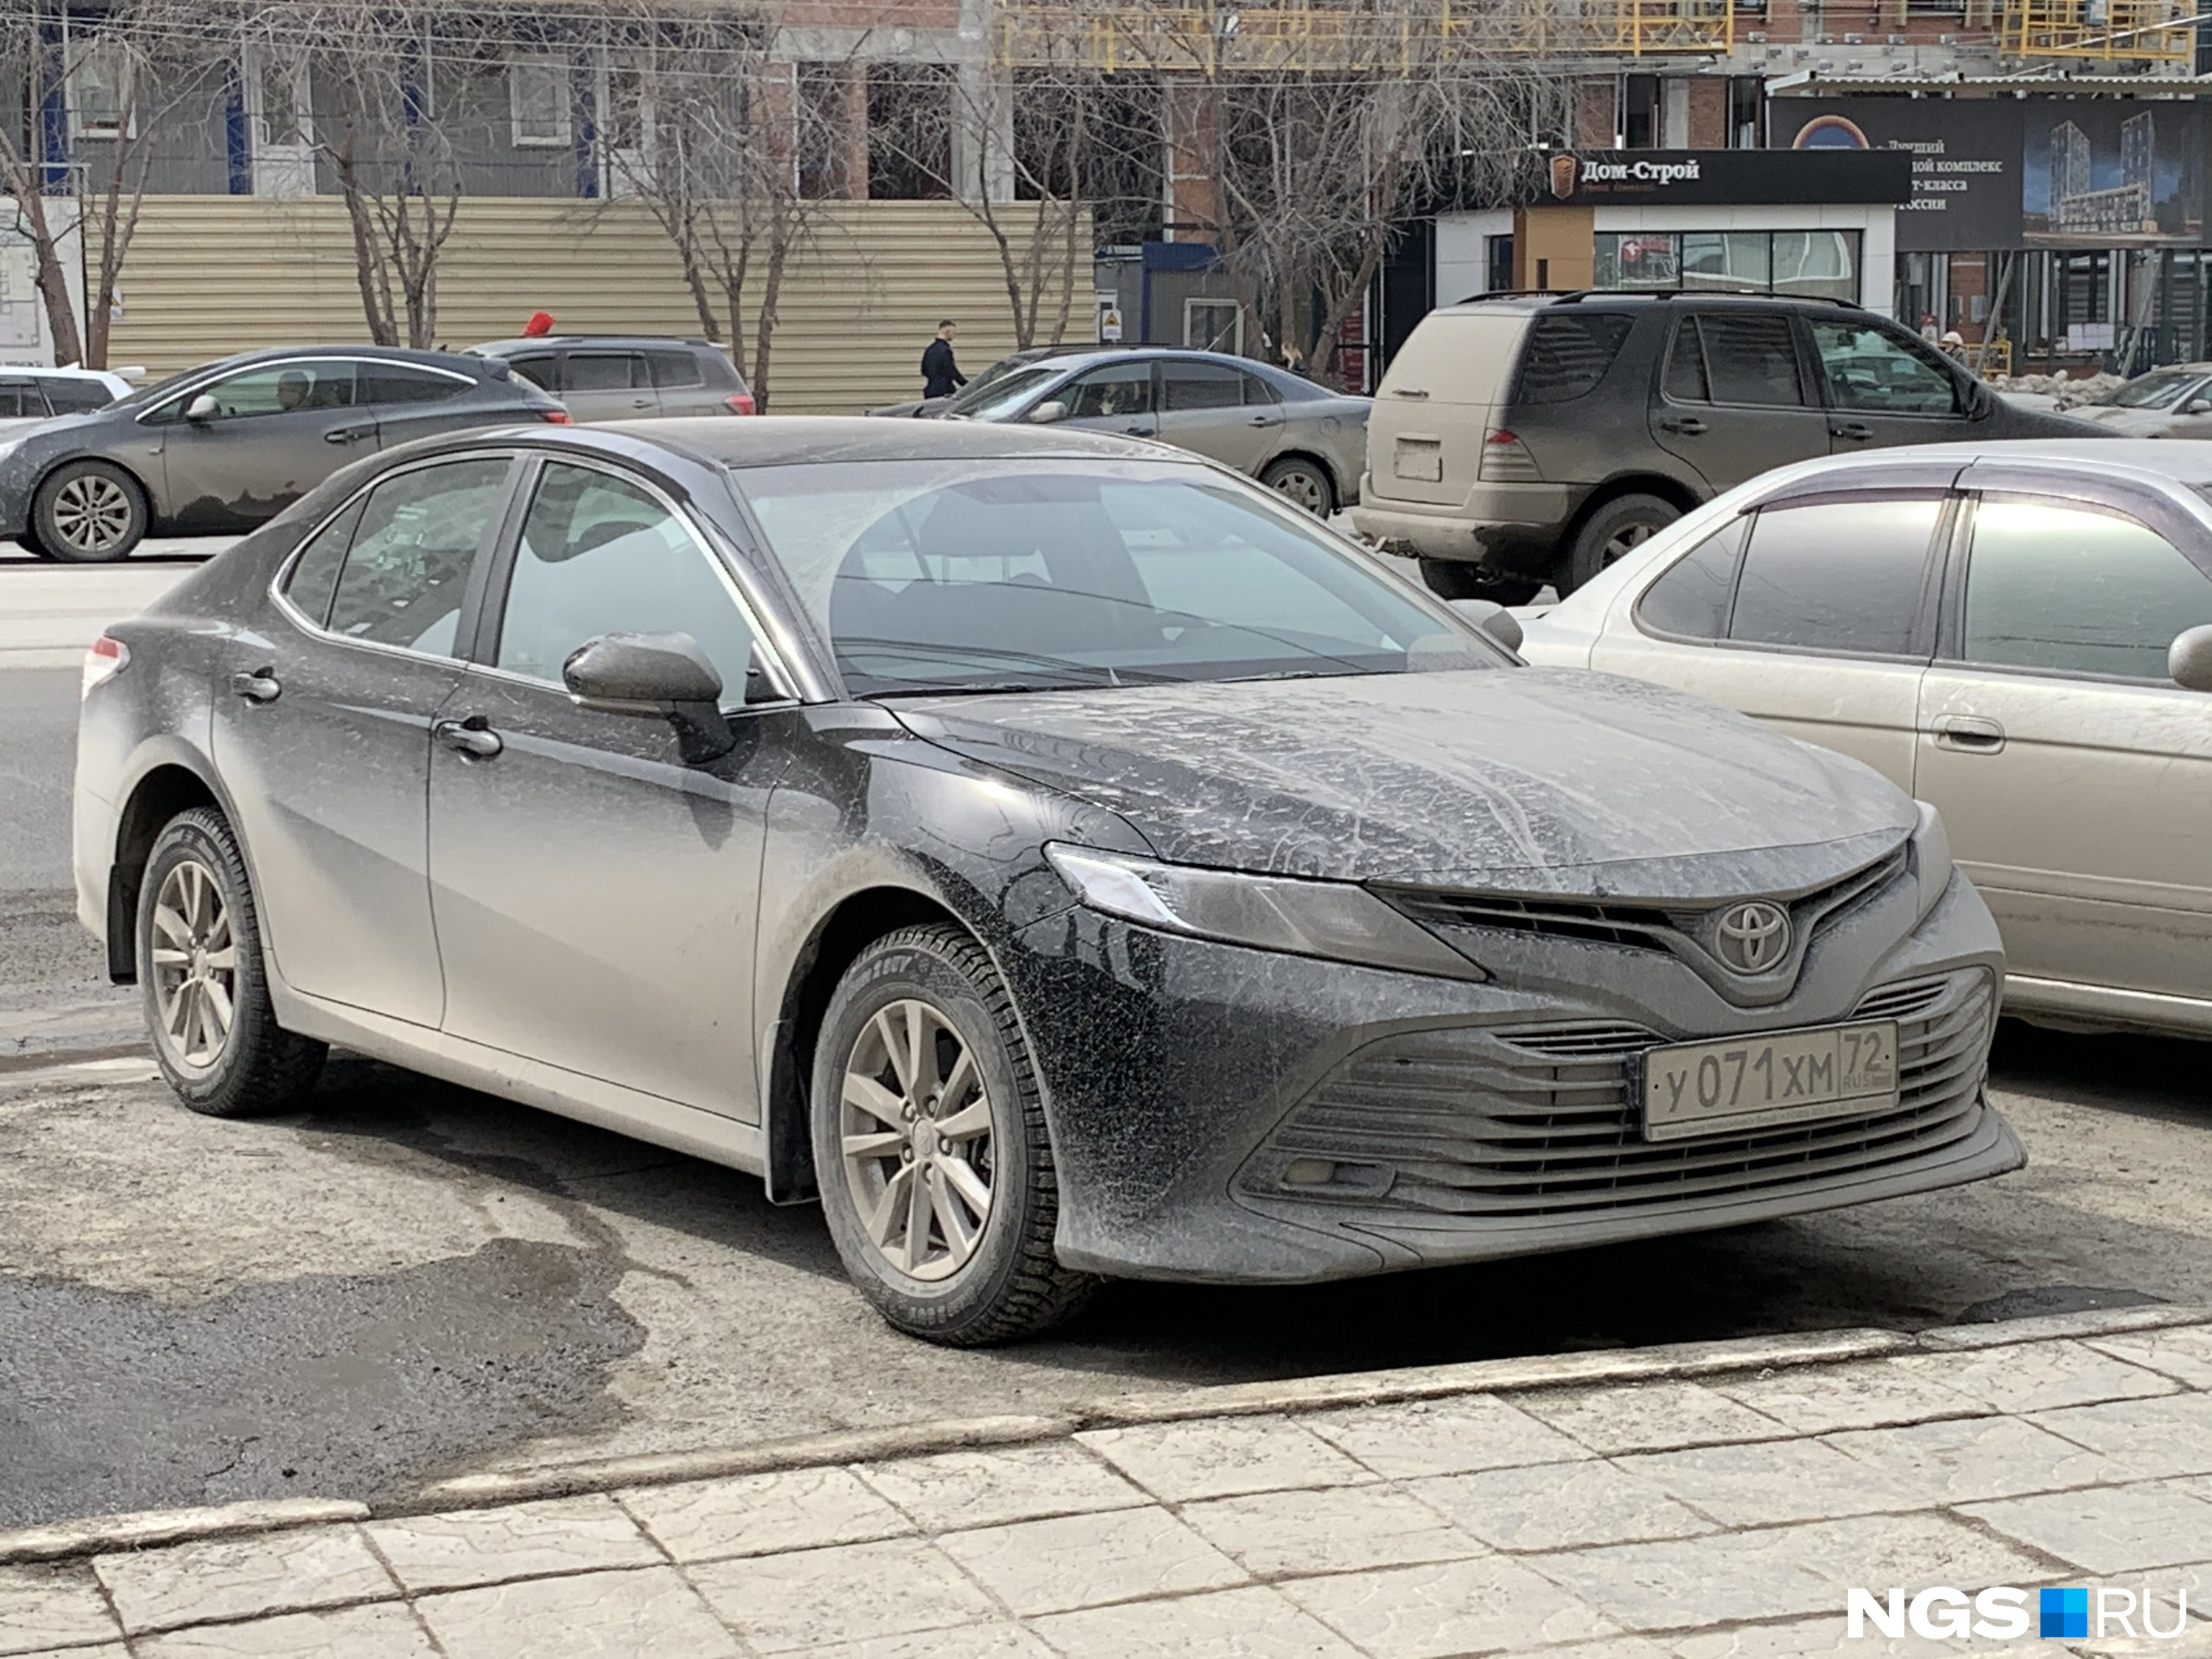 Бизнес-седан Toyota Camry за 600 рублей в час